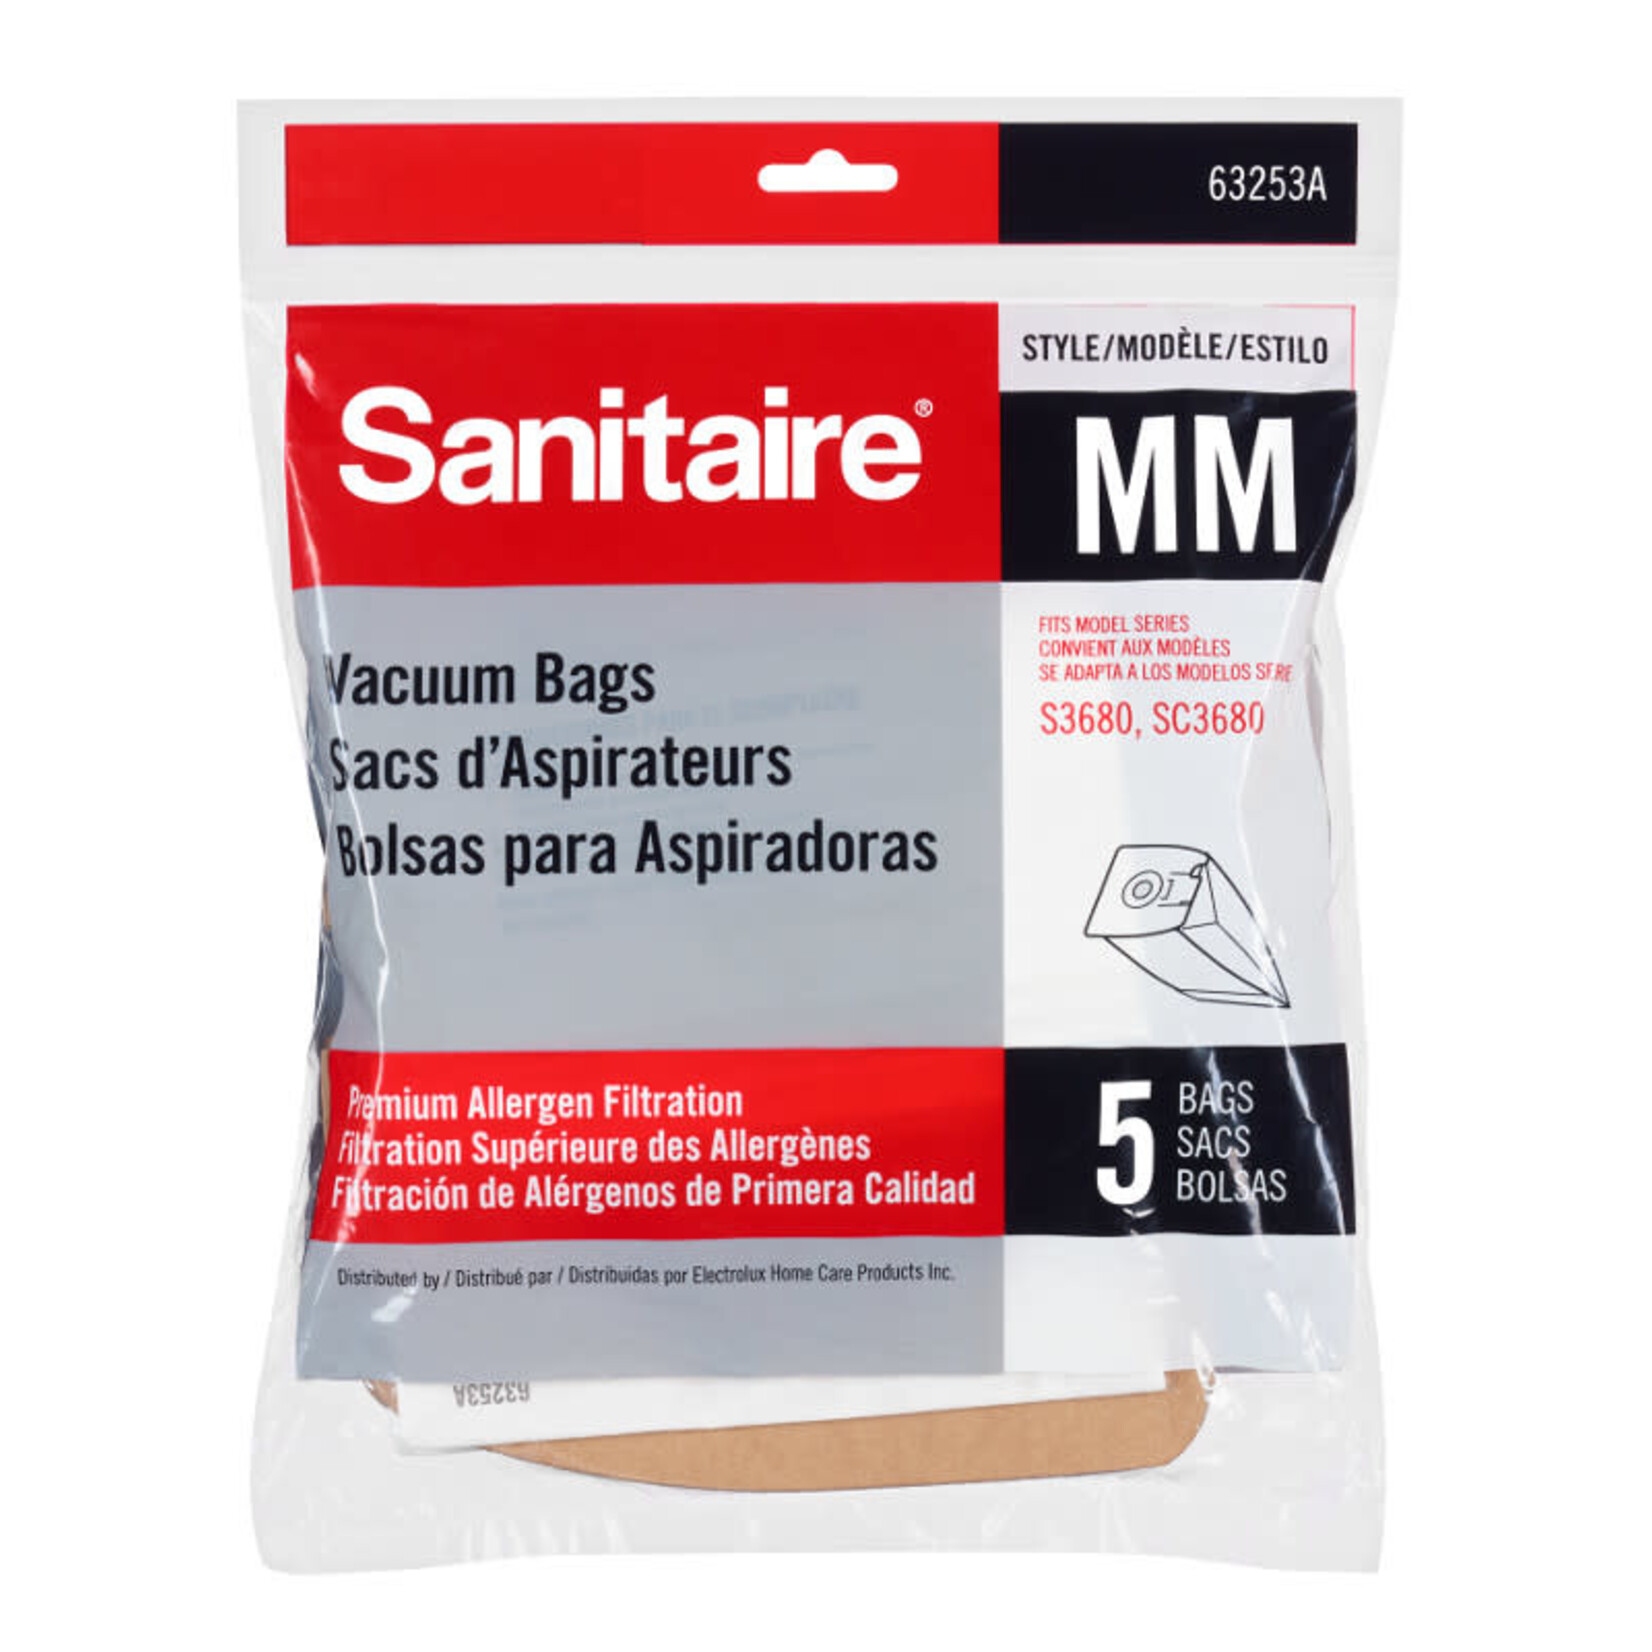 Sanitaire Sanitaire Premium Allergen Style "MM" Bag (5pk)